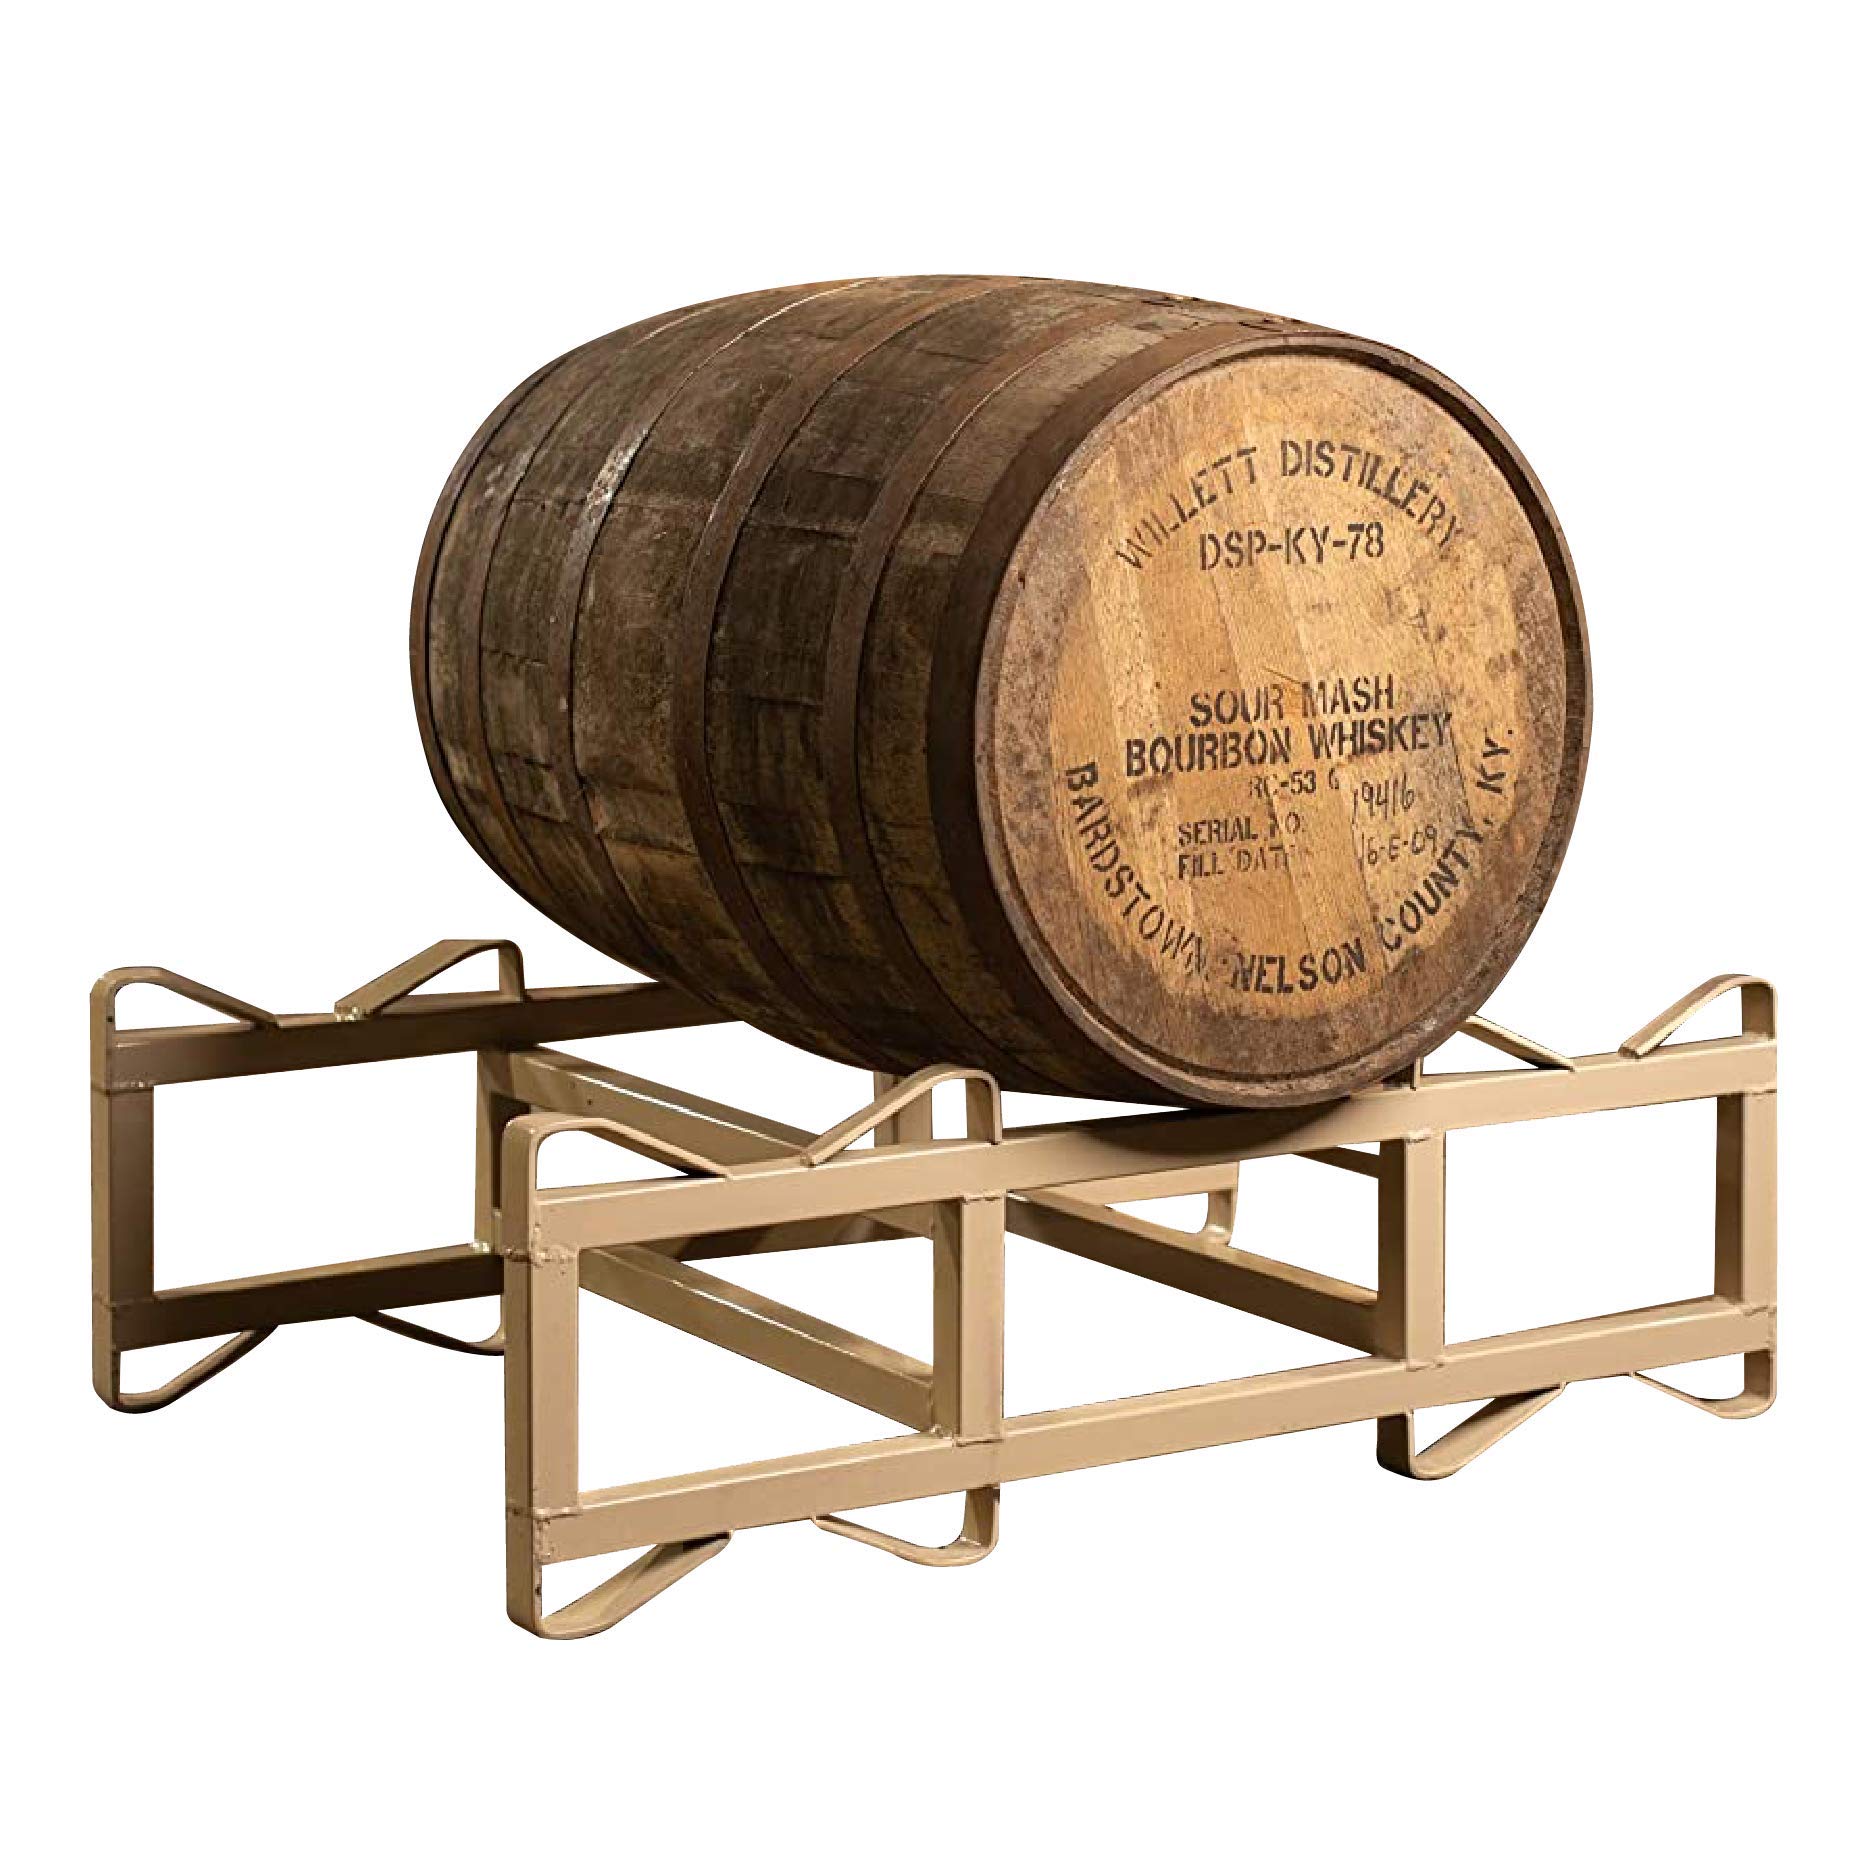 Authentic (Full Size) Willett Bourbon Barrel